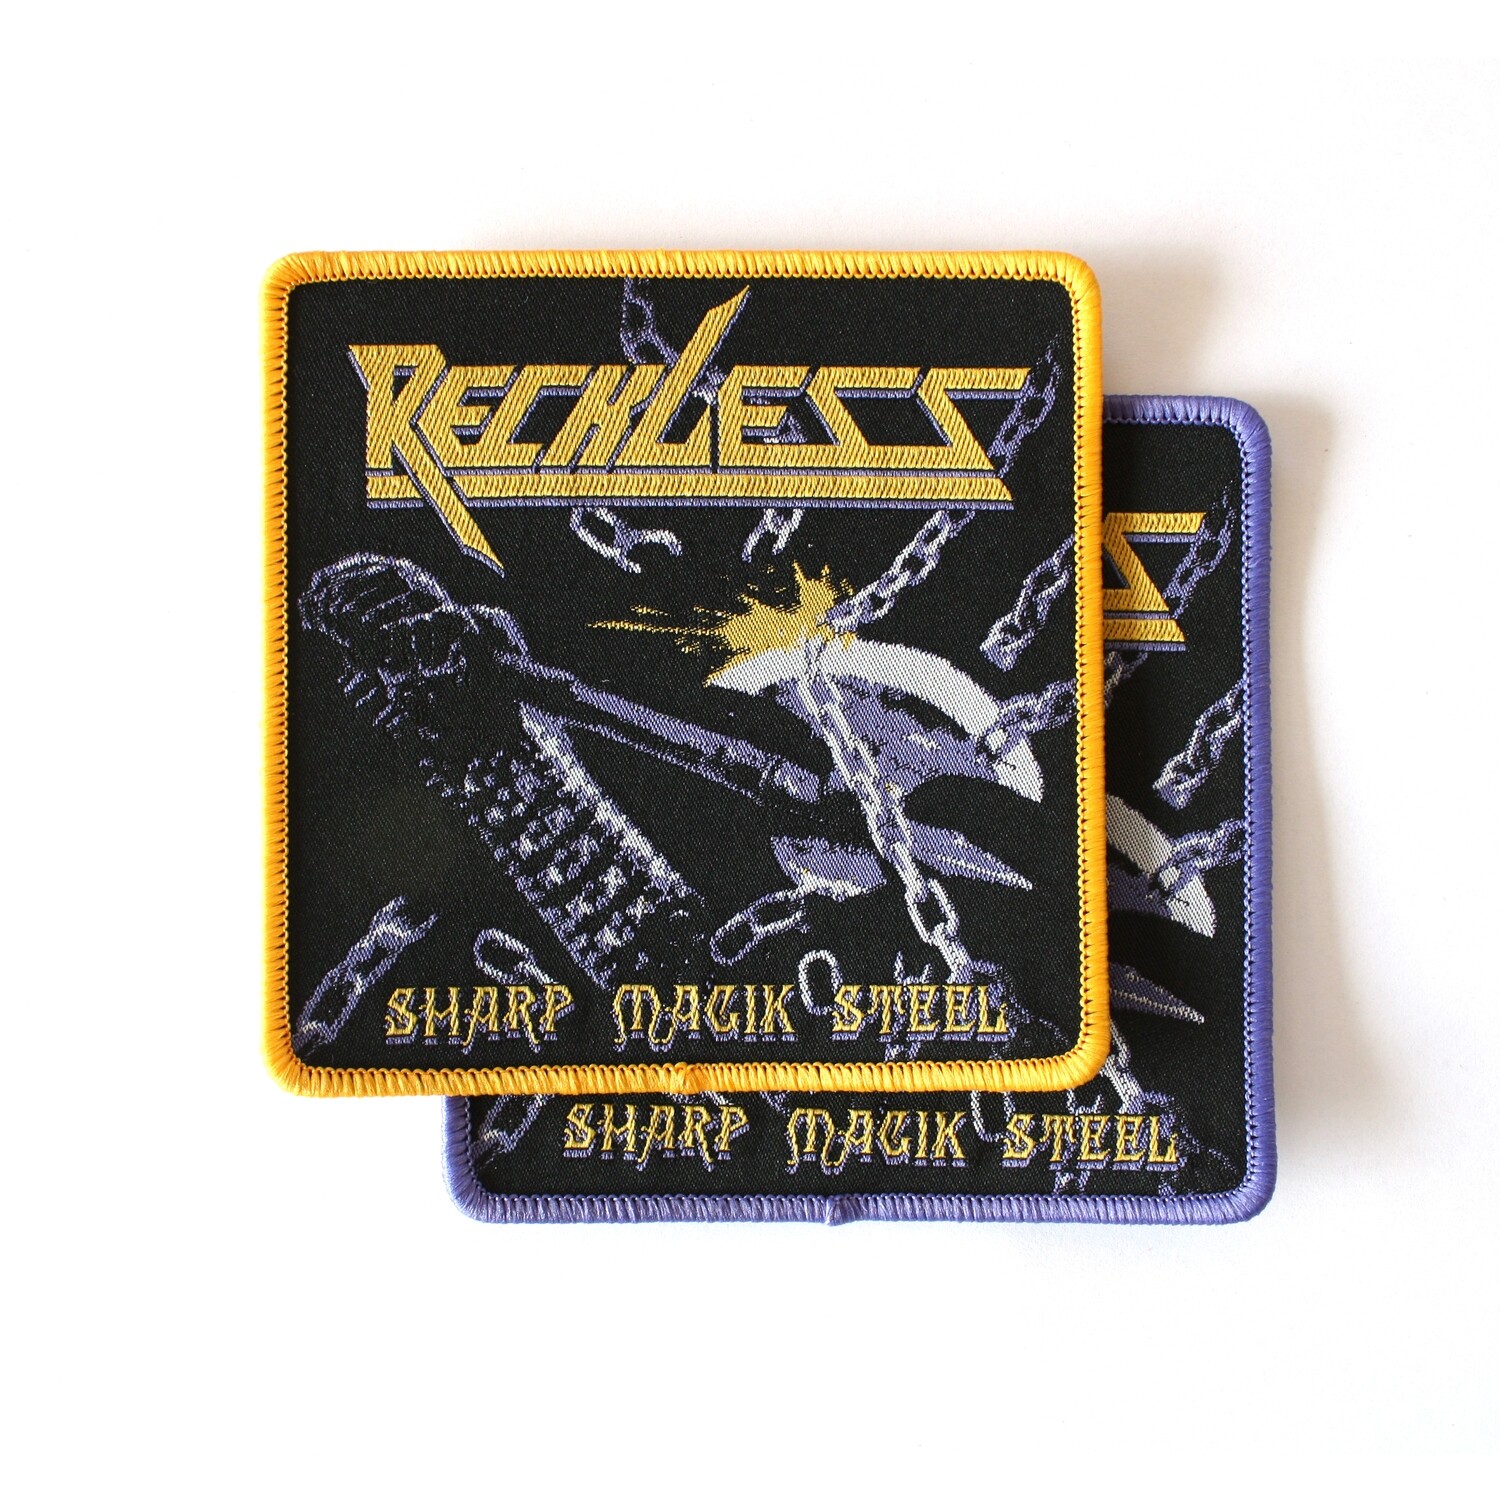 Reckless - Sharp Magik Steel